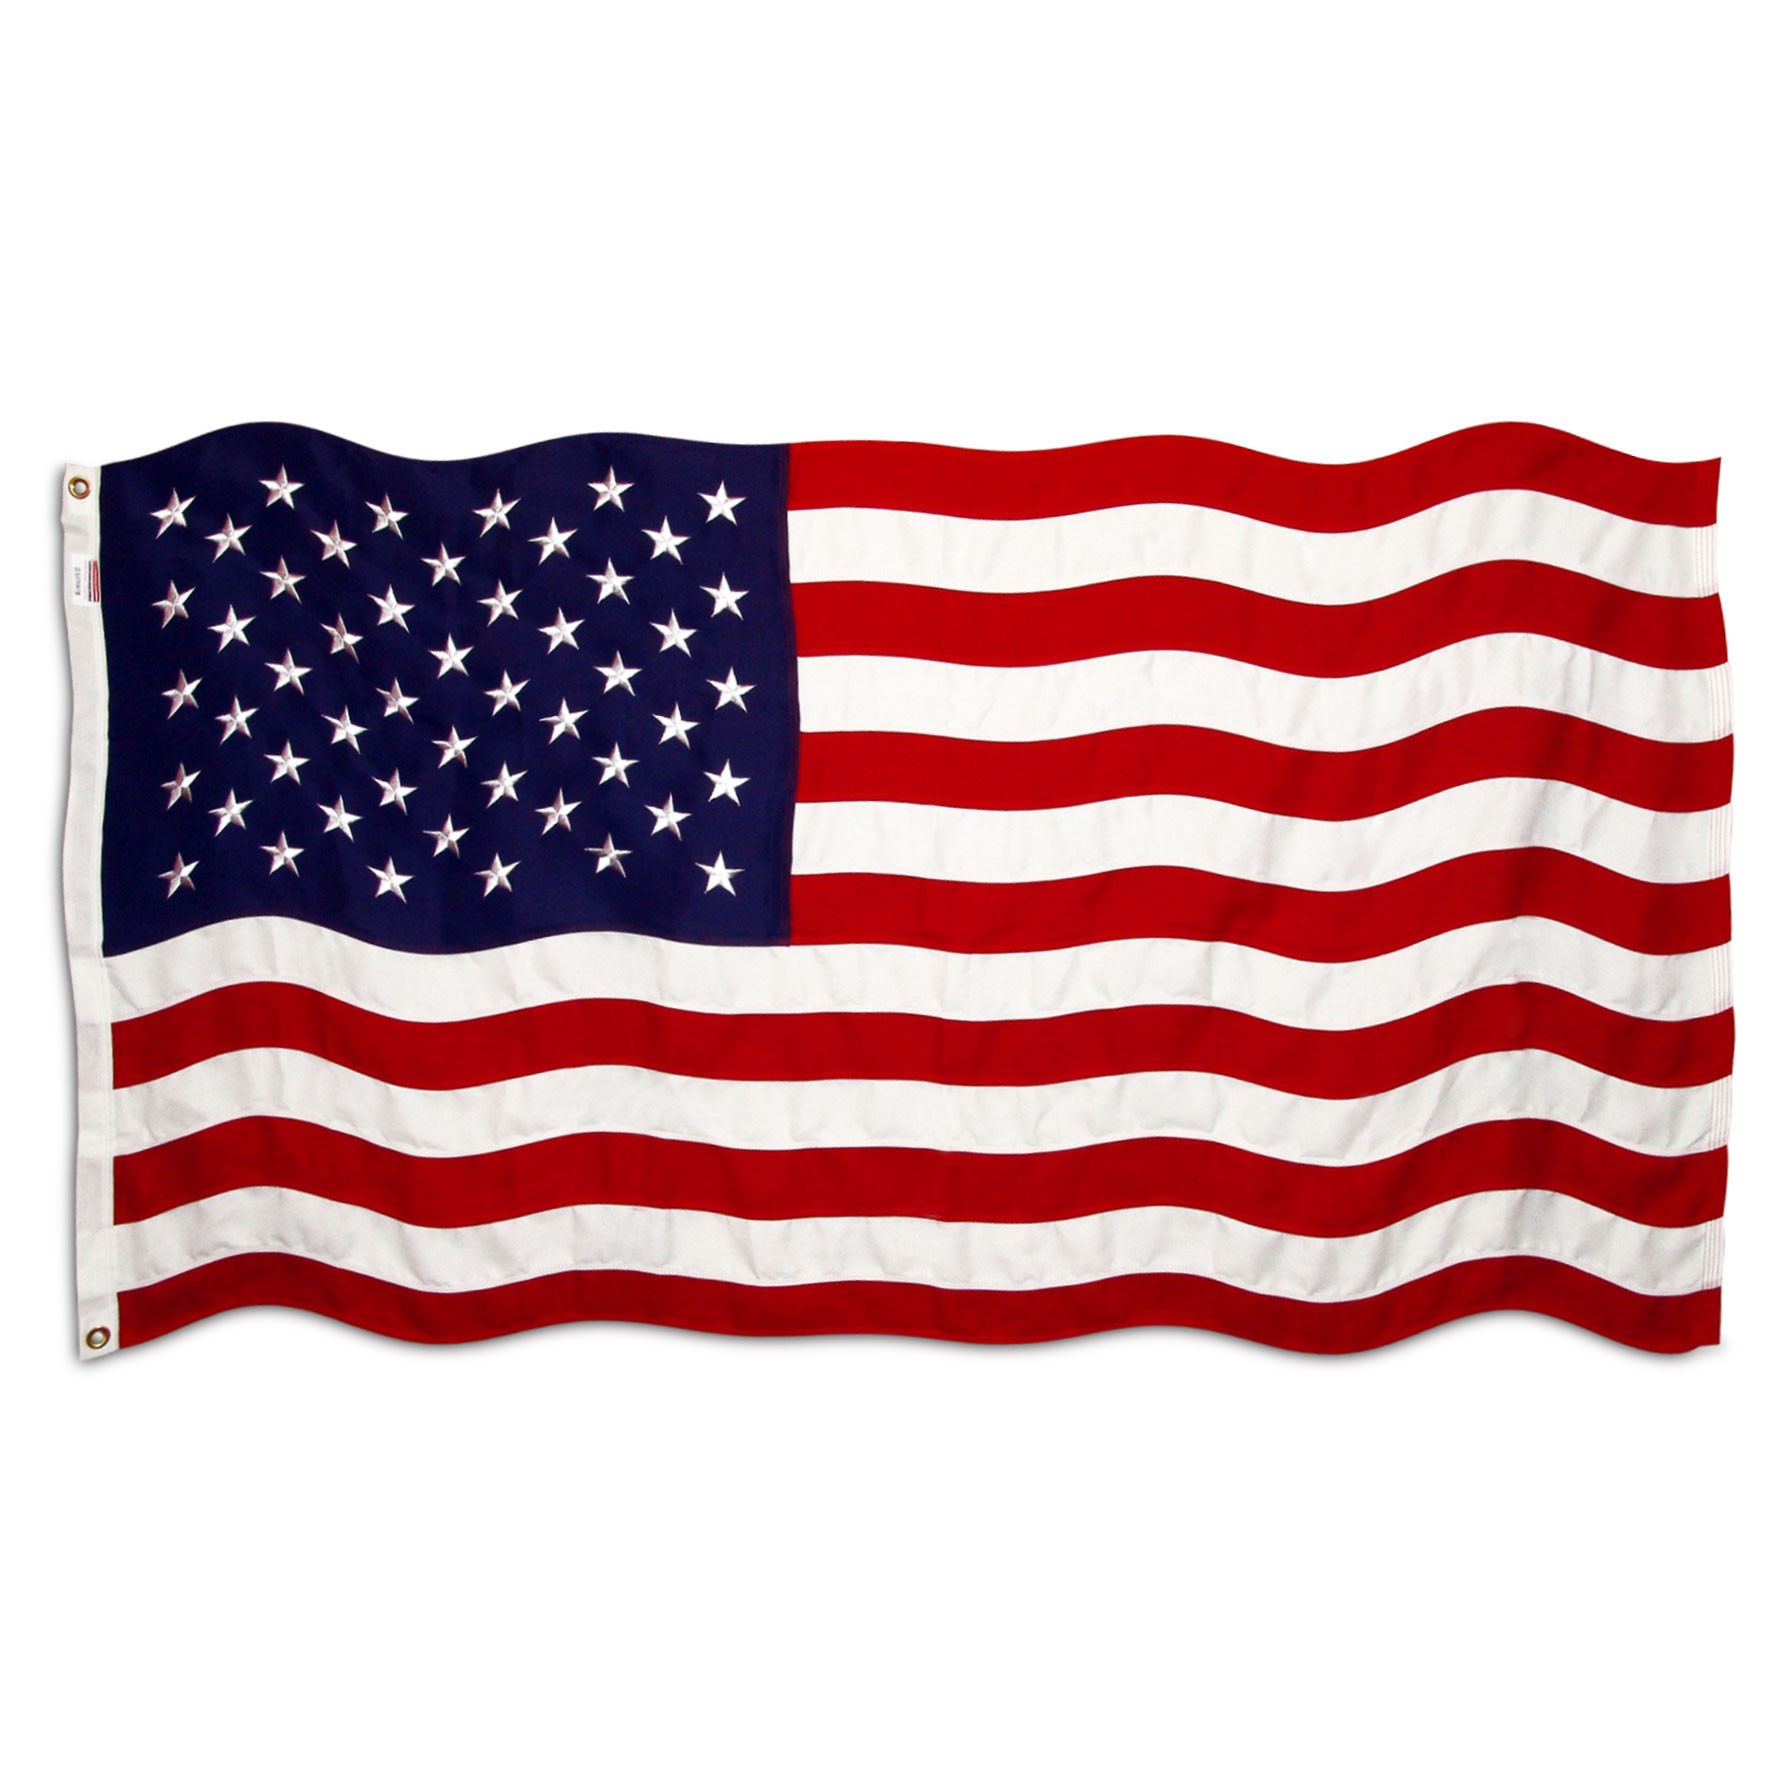 American flag clipart 3 